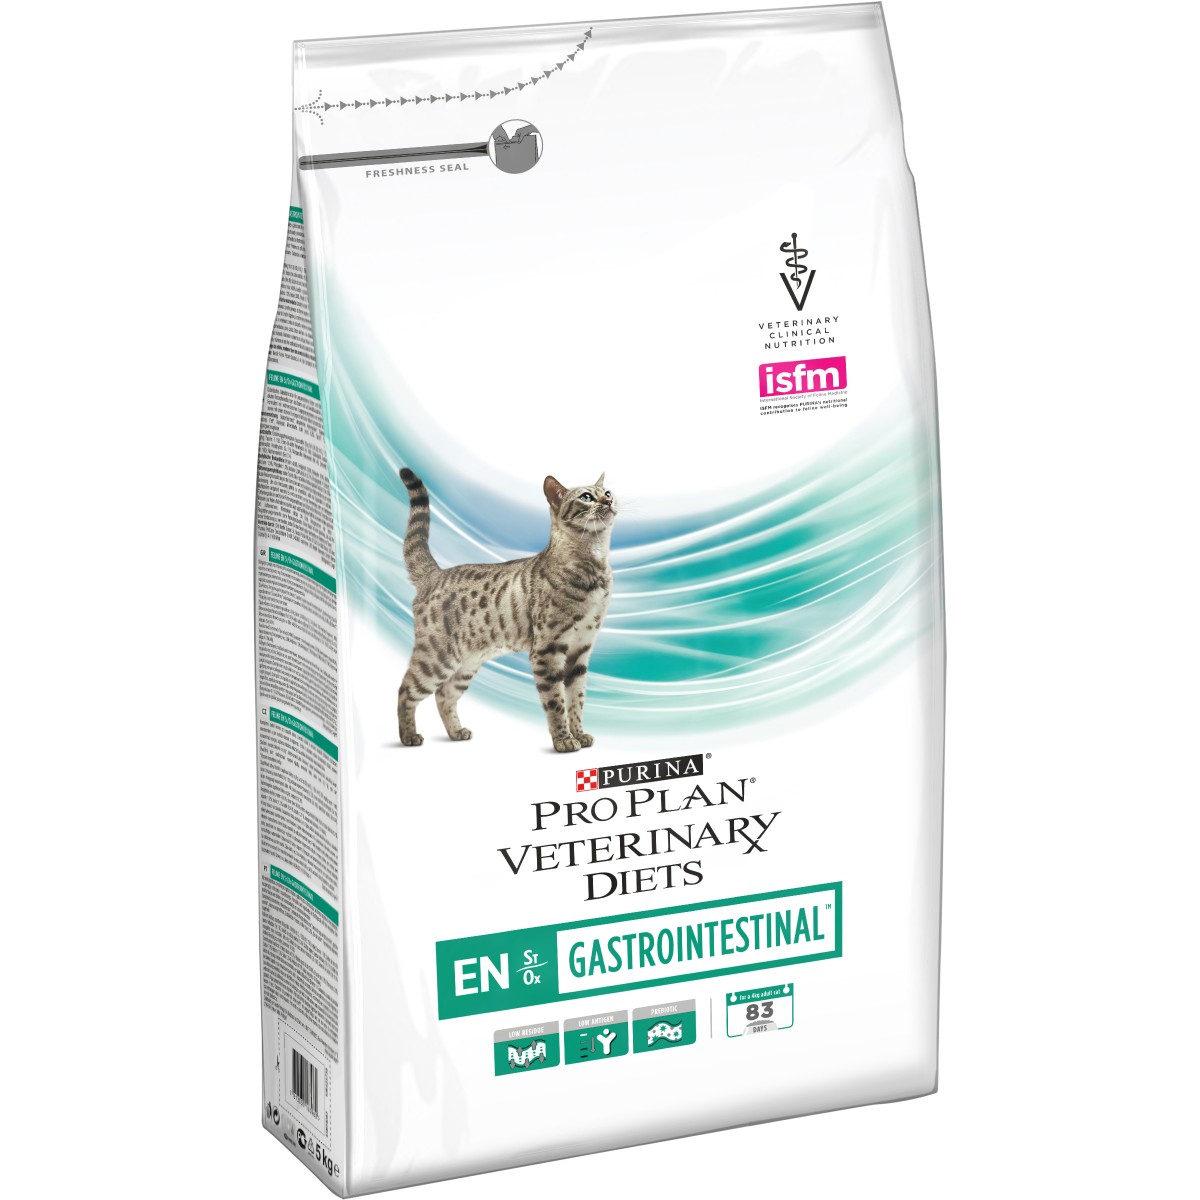 Purina Pro Plan Veterinary Diets Gastrointestinal для кошек. Purina Pro Plan Veterinary Diets Pouch en St/Ox Gastrointestinal с курицей, 85 гр консервы. Пурина для шиншилл. Пурина порошок. Для собак pro plan veterinary diets gastrointestinal